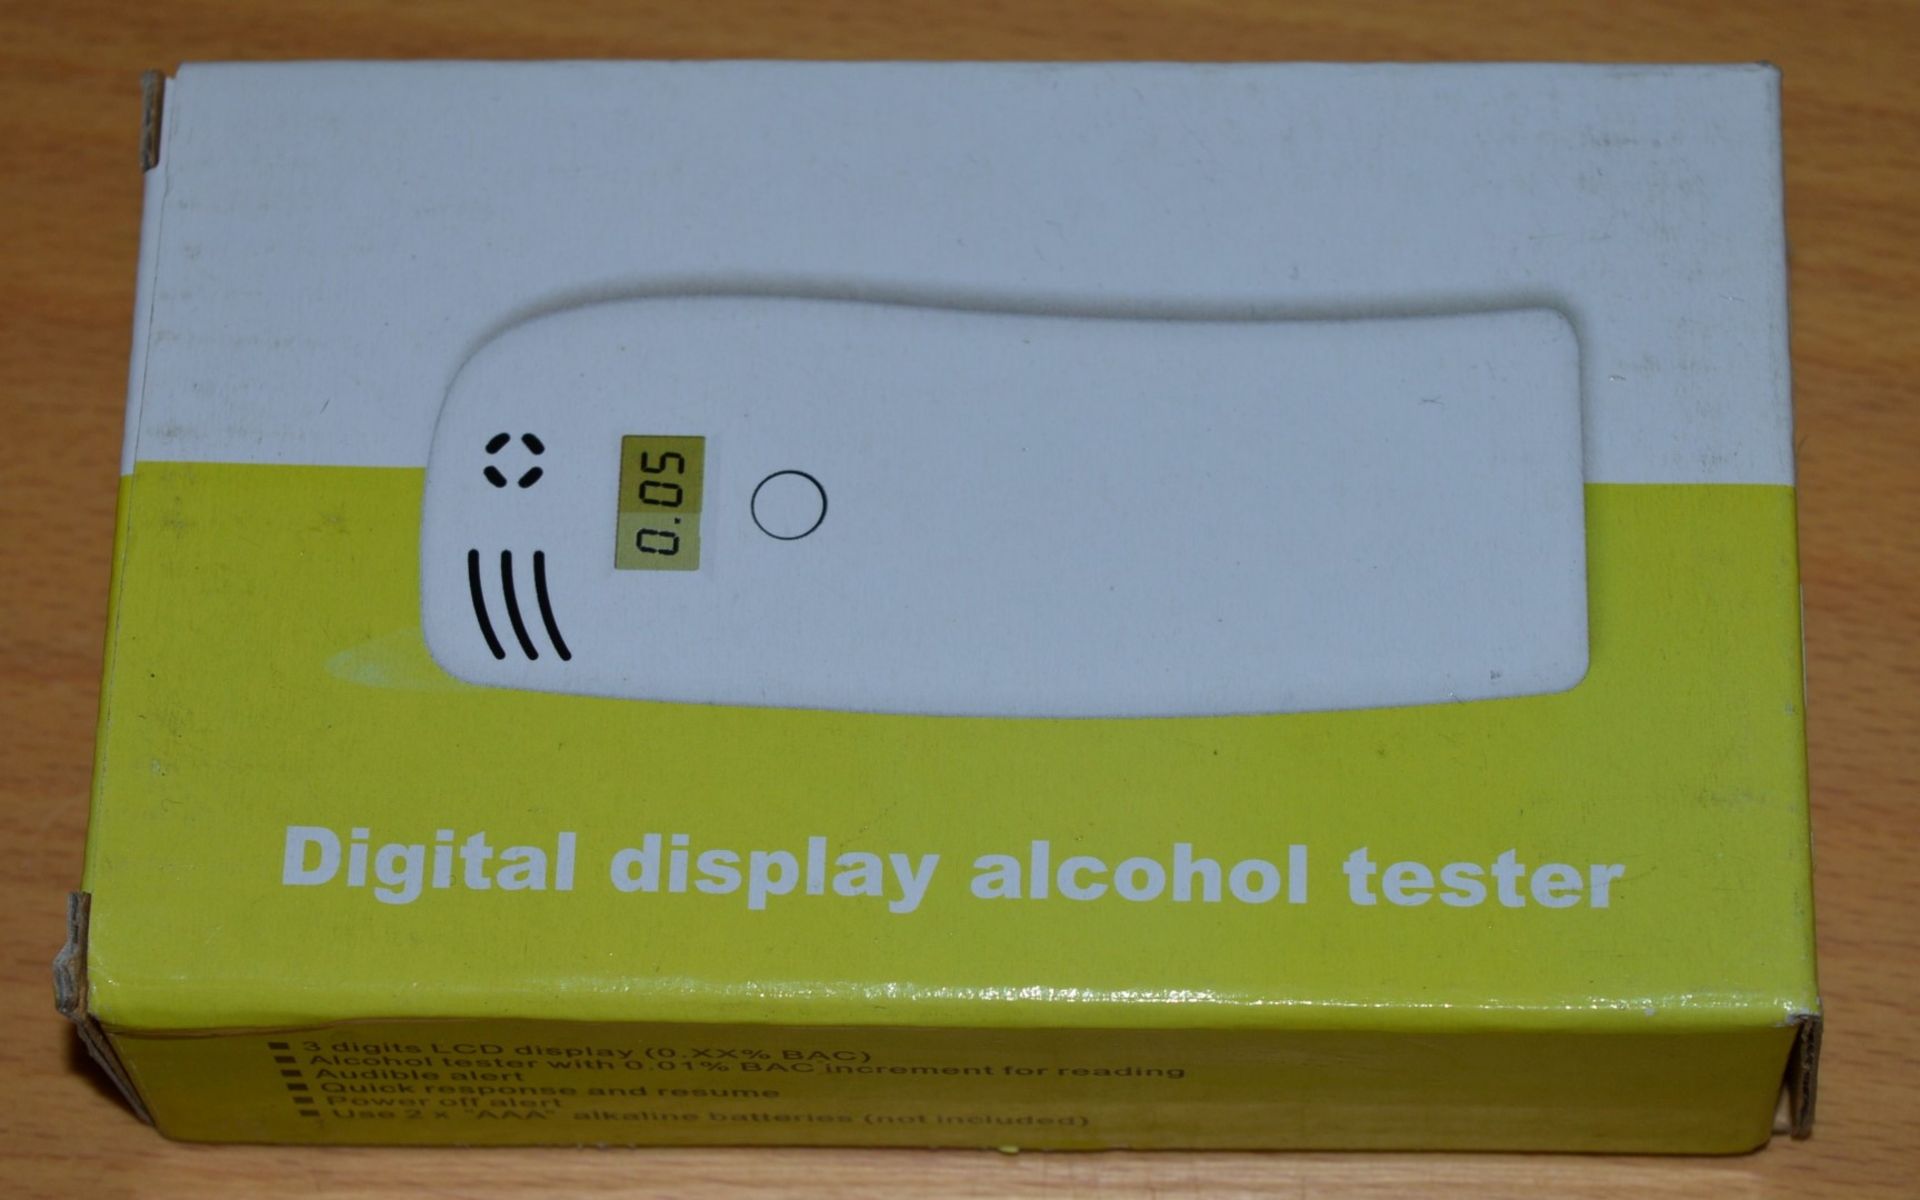 1 x Digital Display Alcohol Tester - New in Box - CL011 - Ref JP706 - Location: Altrincham WA14